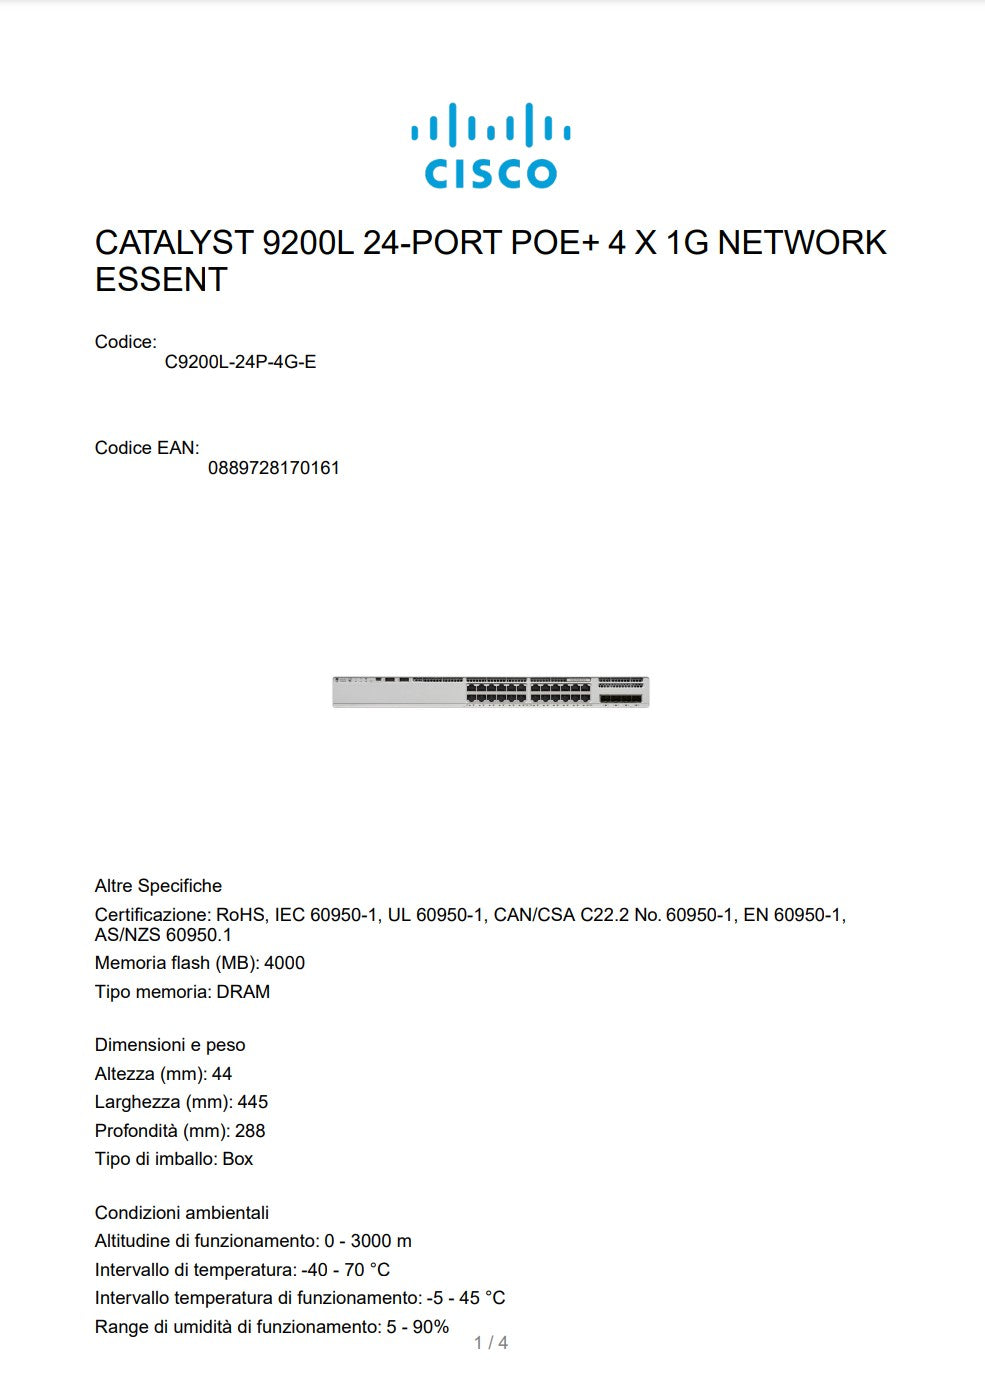 CISCO CATALYST 9200L 24-PORT POE+ 4 X 1G NETWORK ESSENT + C9200L DNA ESSENTIALS 24-PORT 3 YEAR TERM LICENSE